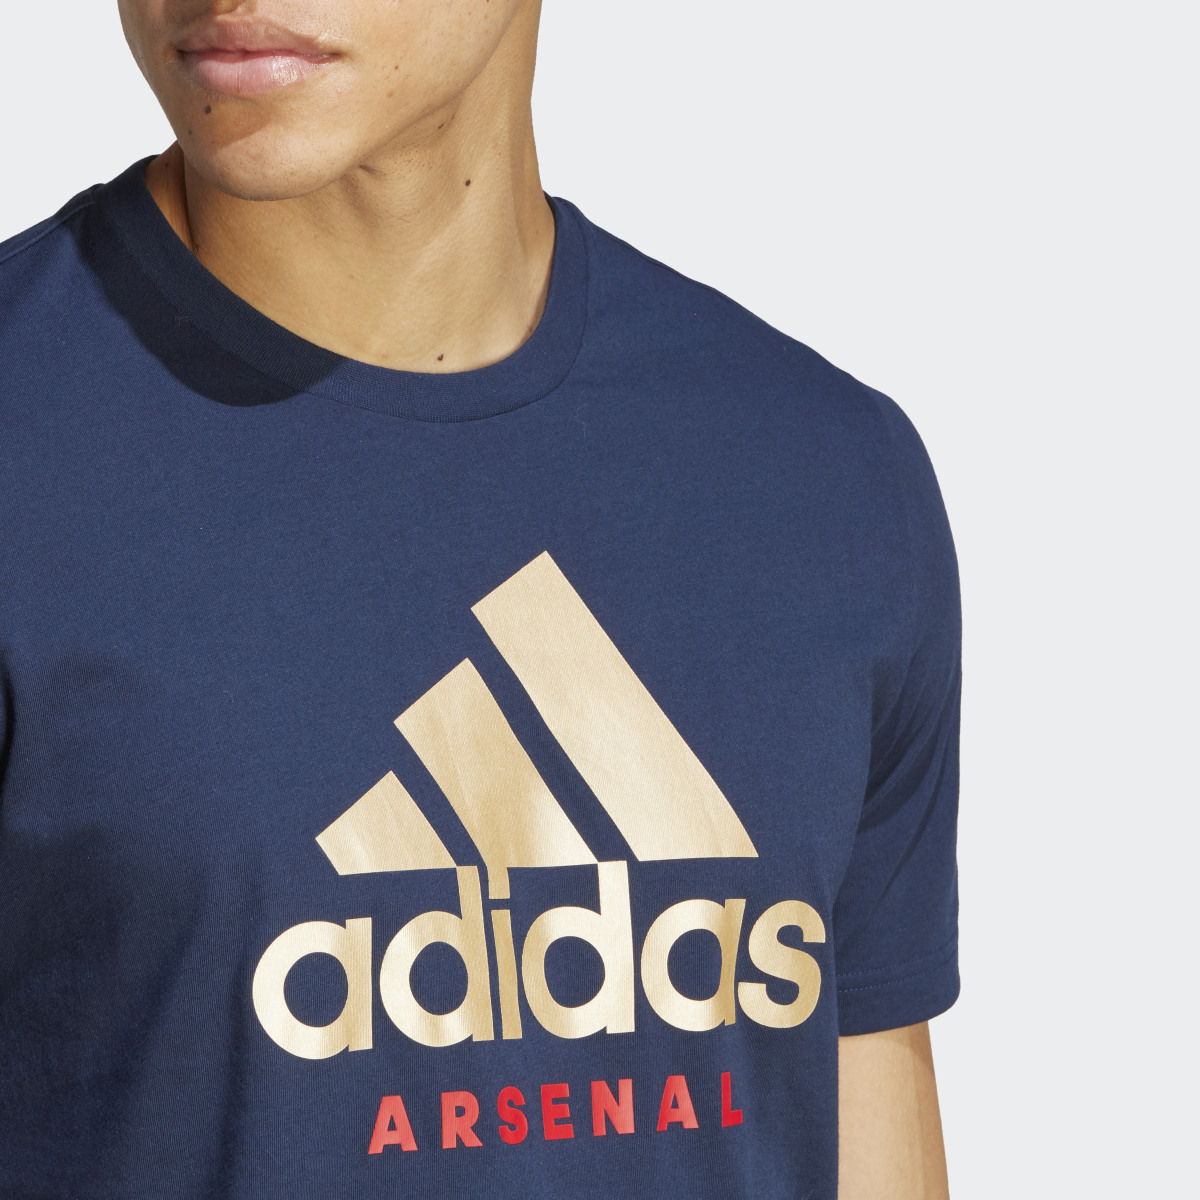 Adidas Arsenal Street Graphic T-Shirt. 6